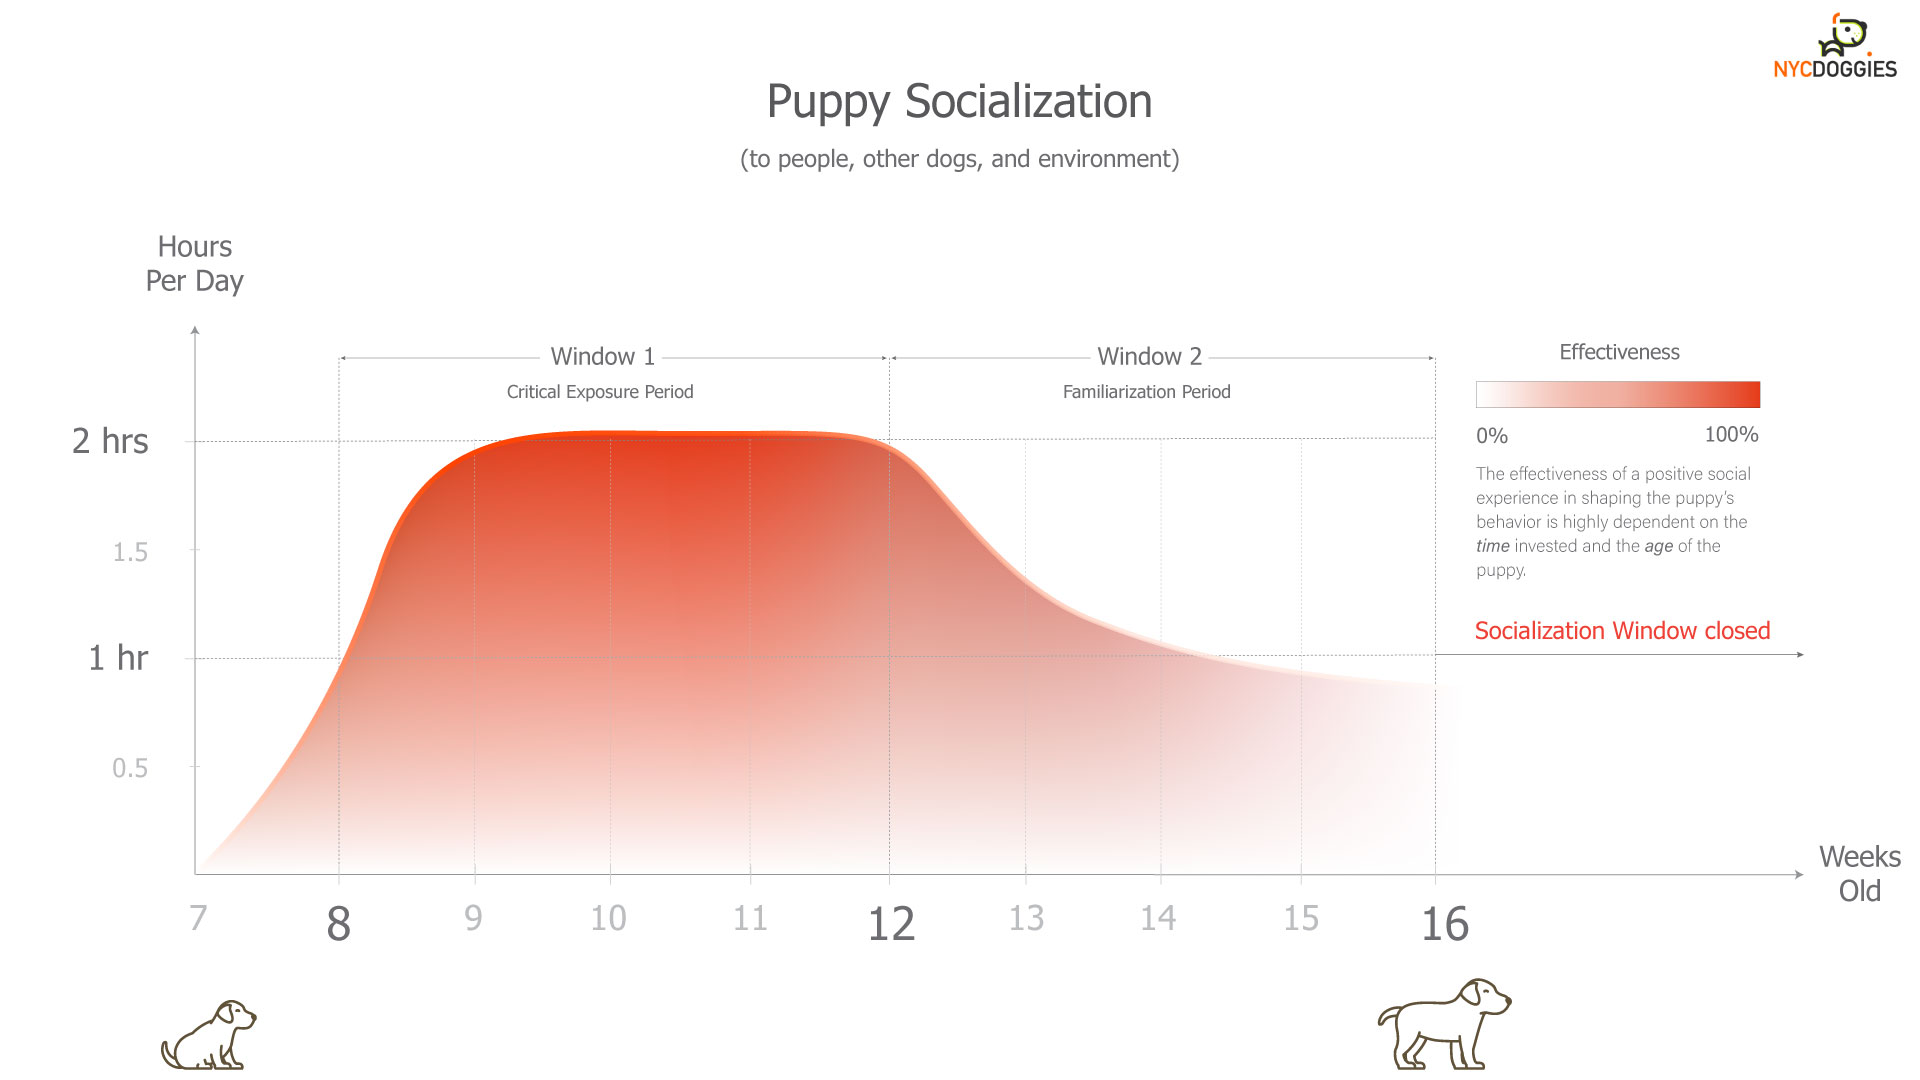 Graph of Puppy Socialization Window